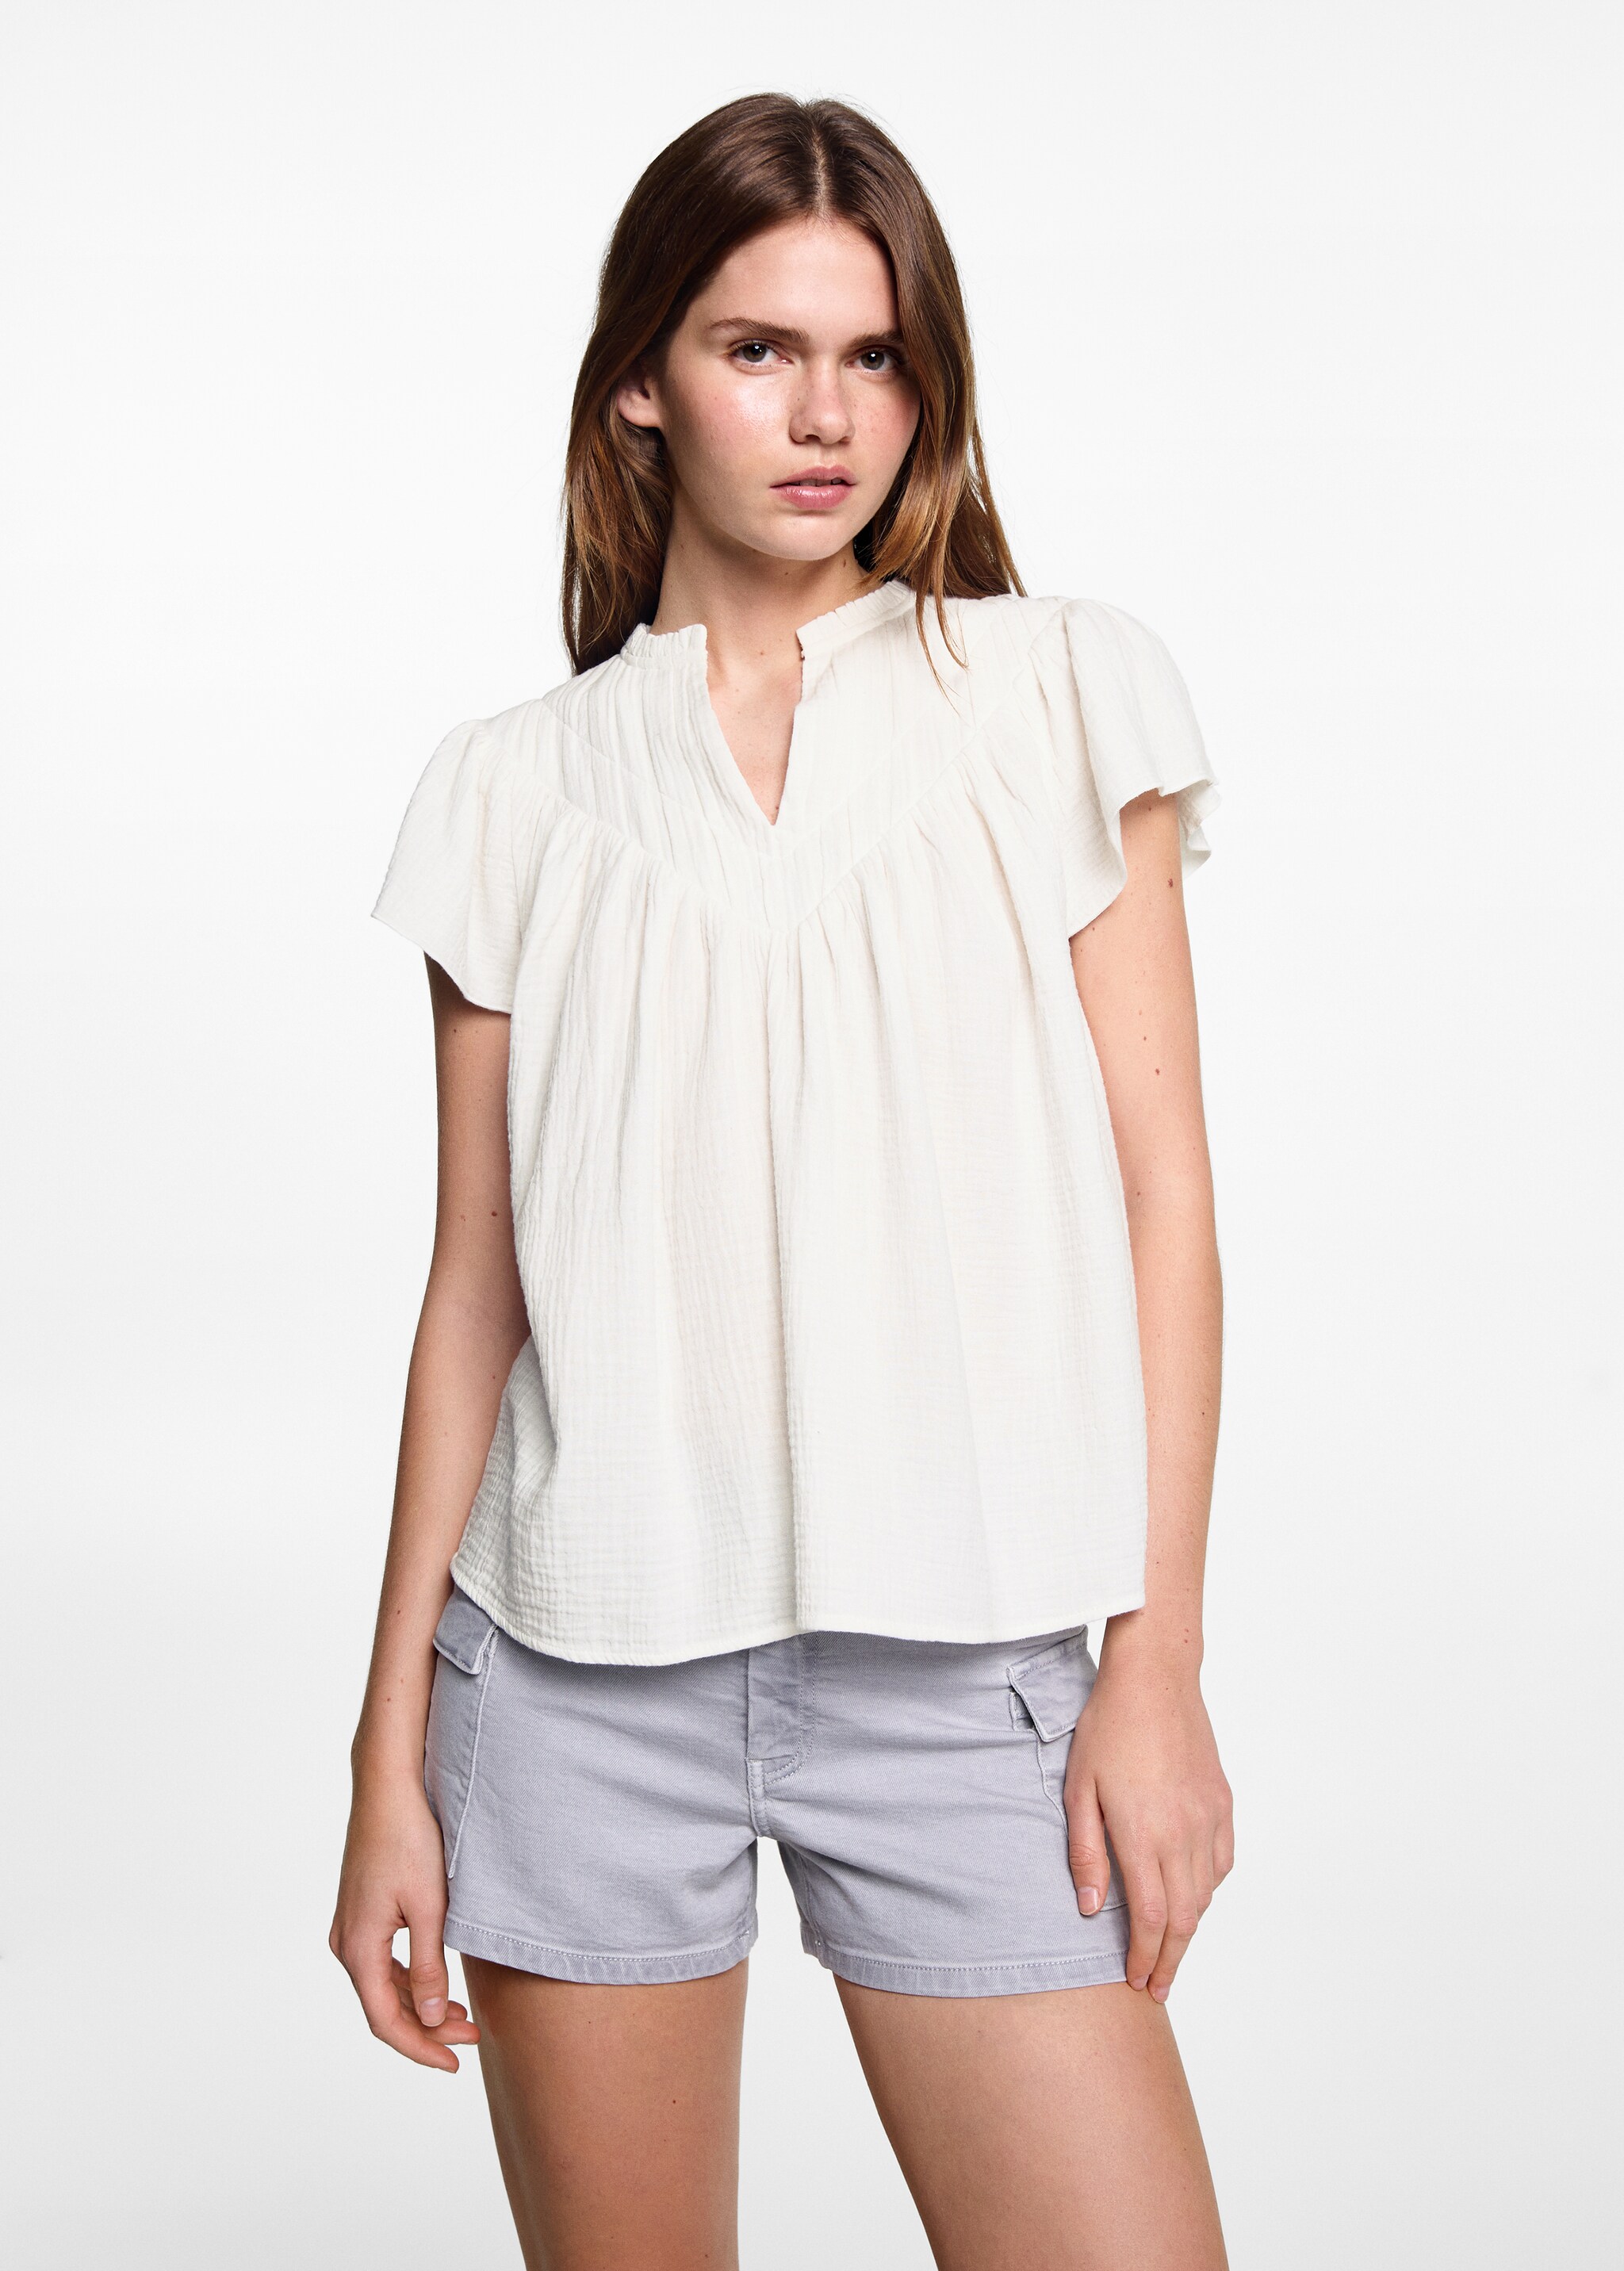 Cheesecloth cotton blouse - Medium plane